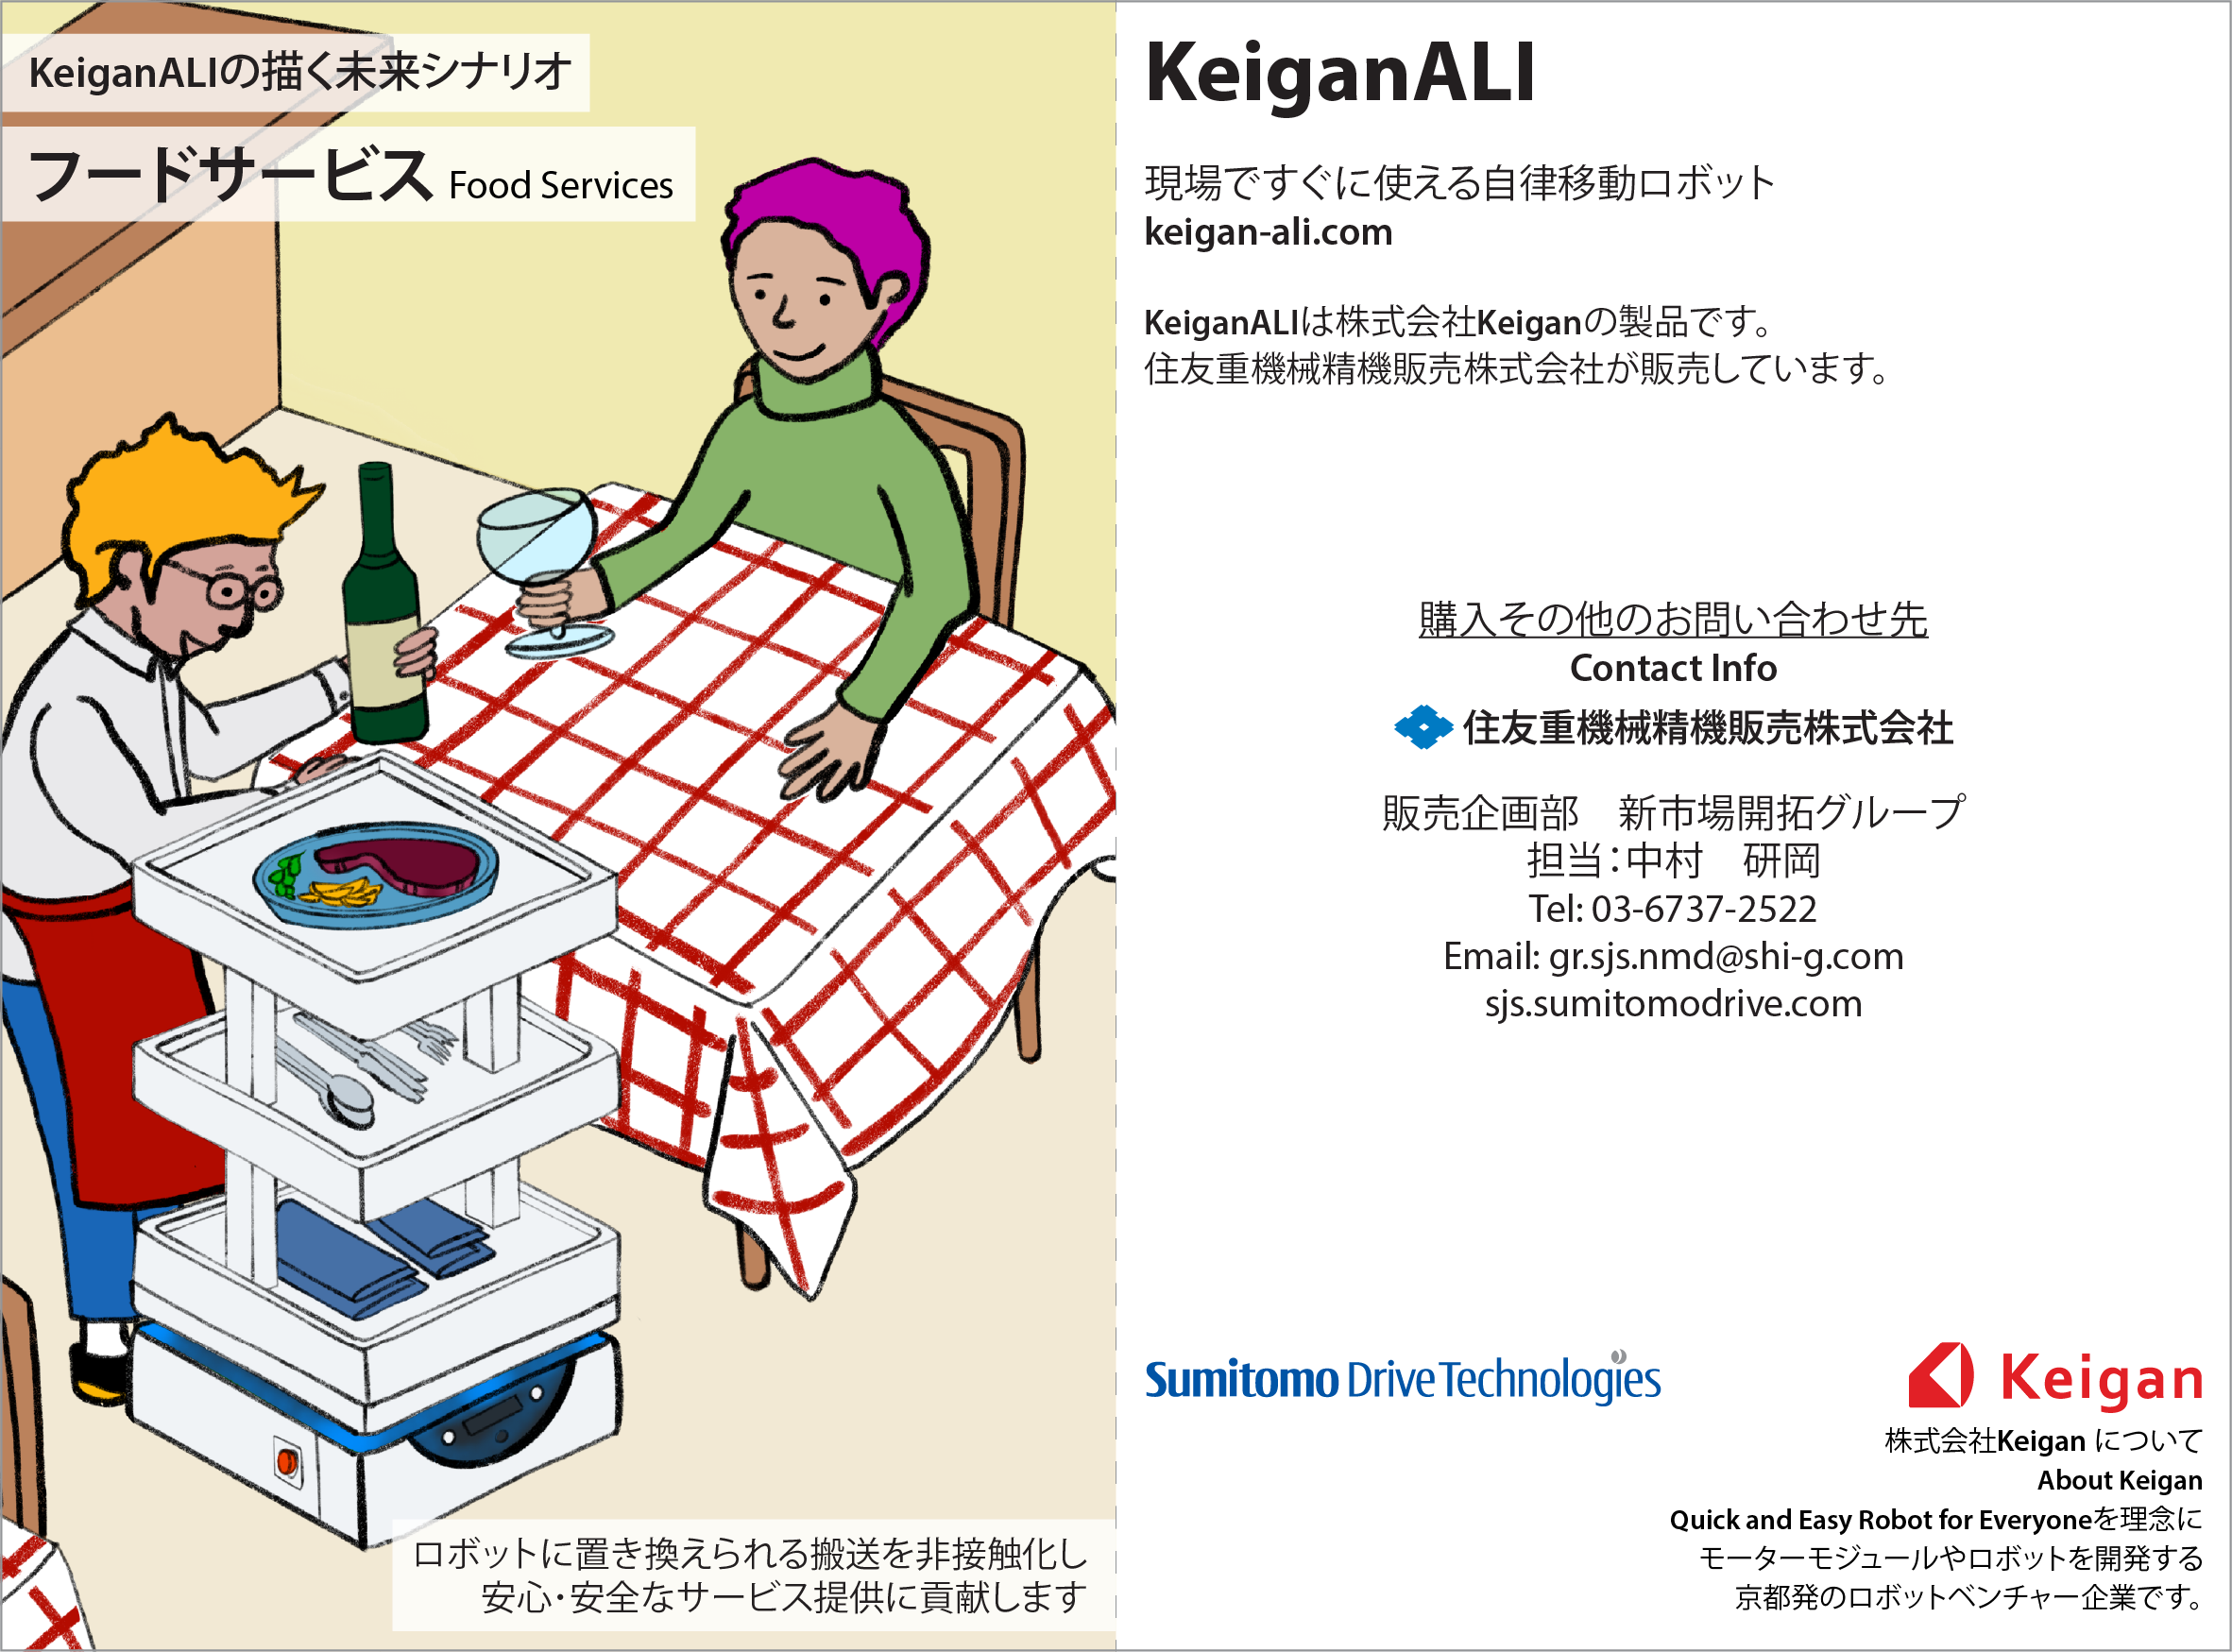 Keigan_Ali_Postcards-Food_Services.png